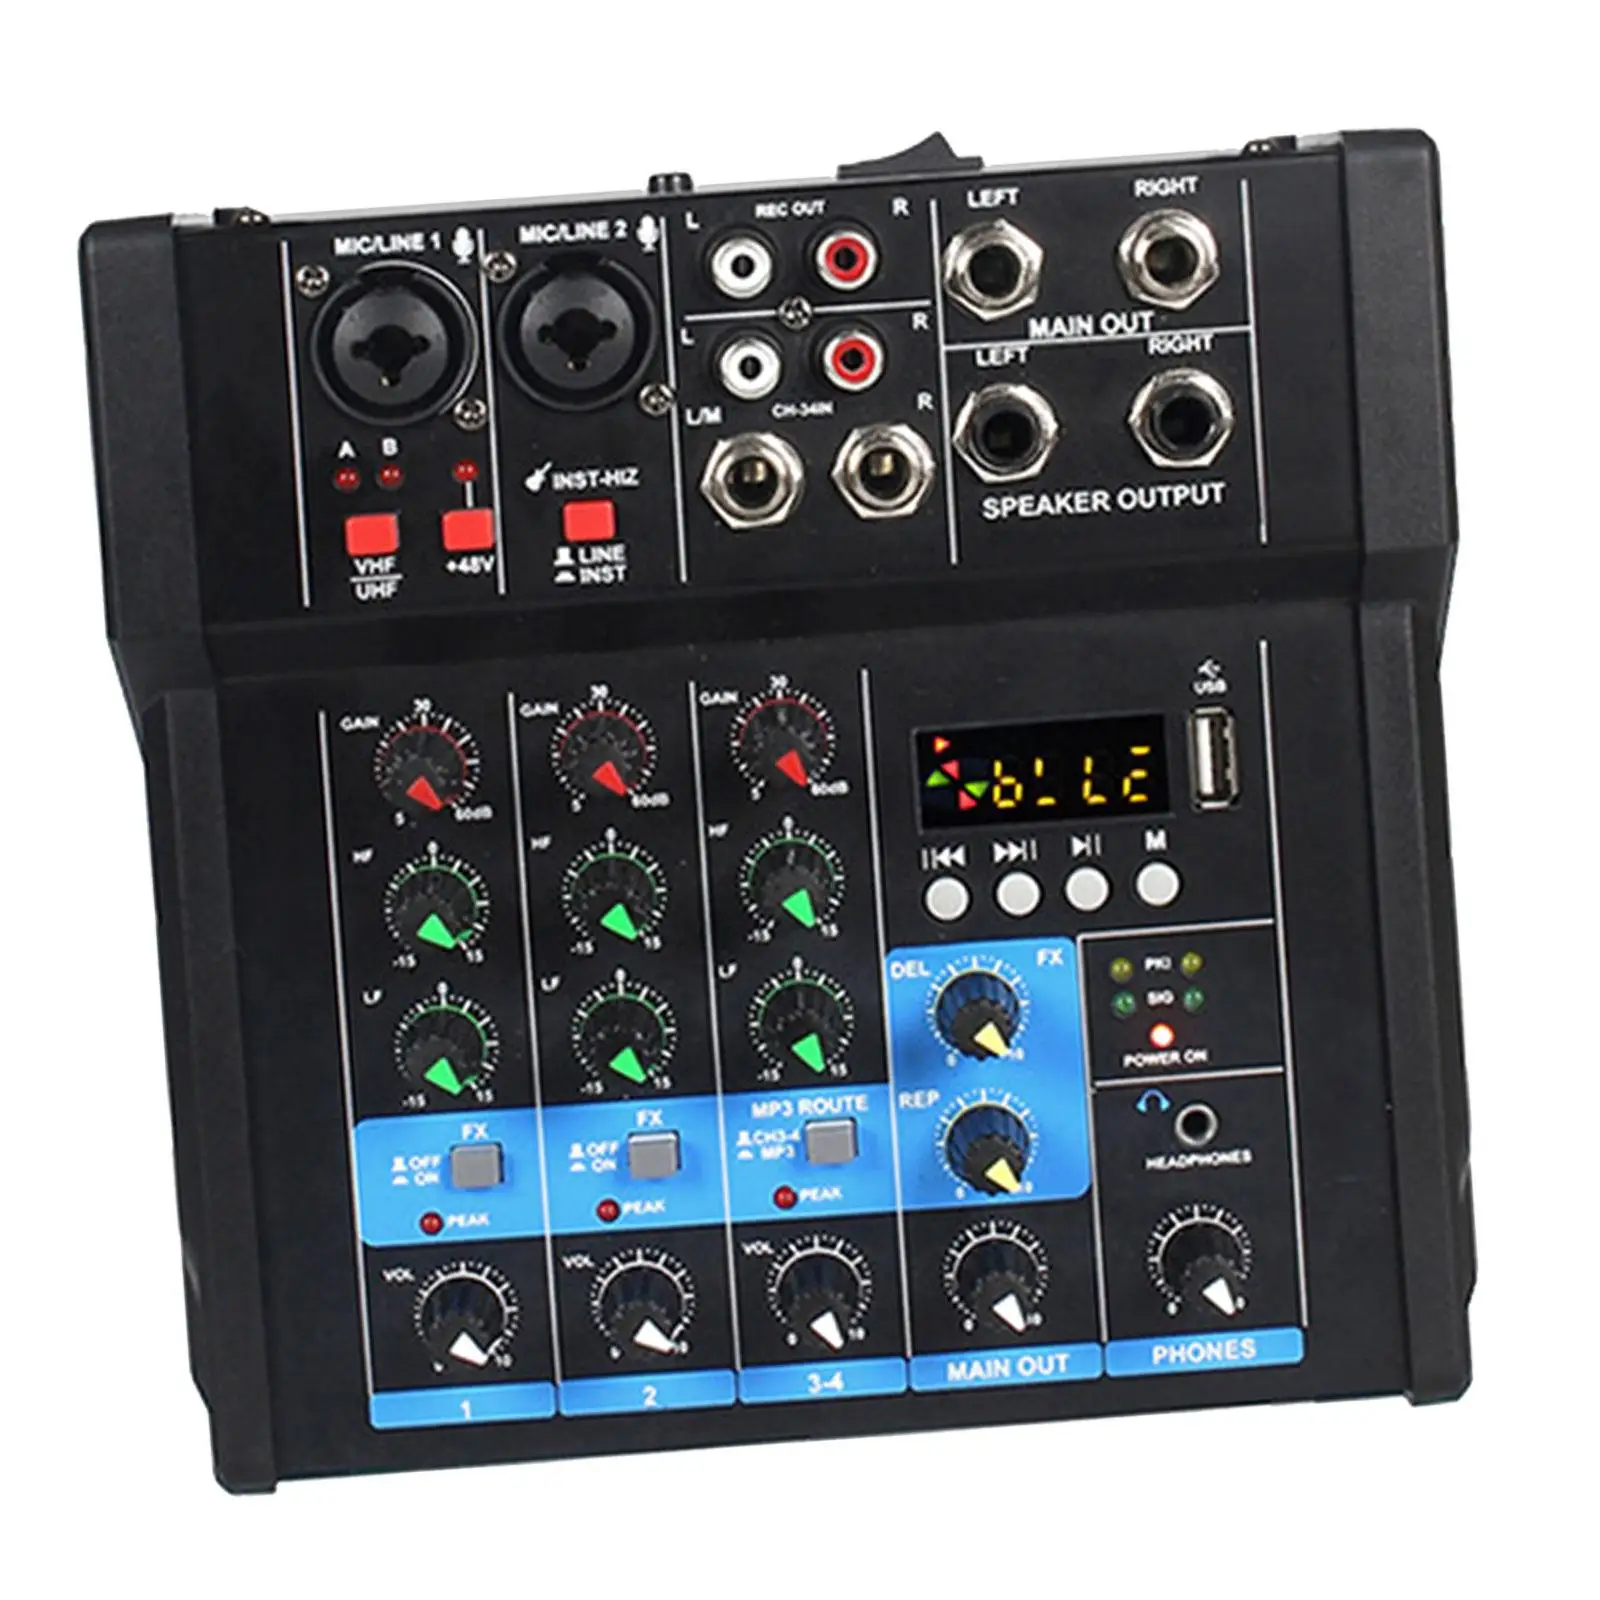 Audio Mixer Amplifier MP3 Bluetooth USB Interface Sound Board Console Sound Mixer for Computer Recording Home Karaoke Party